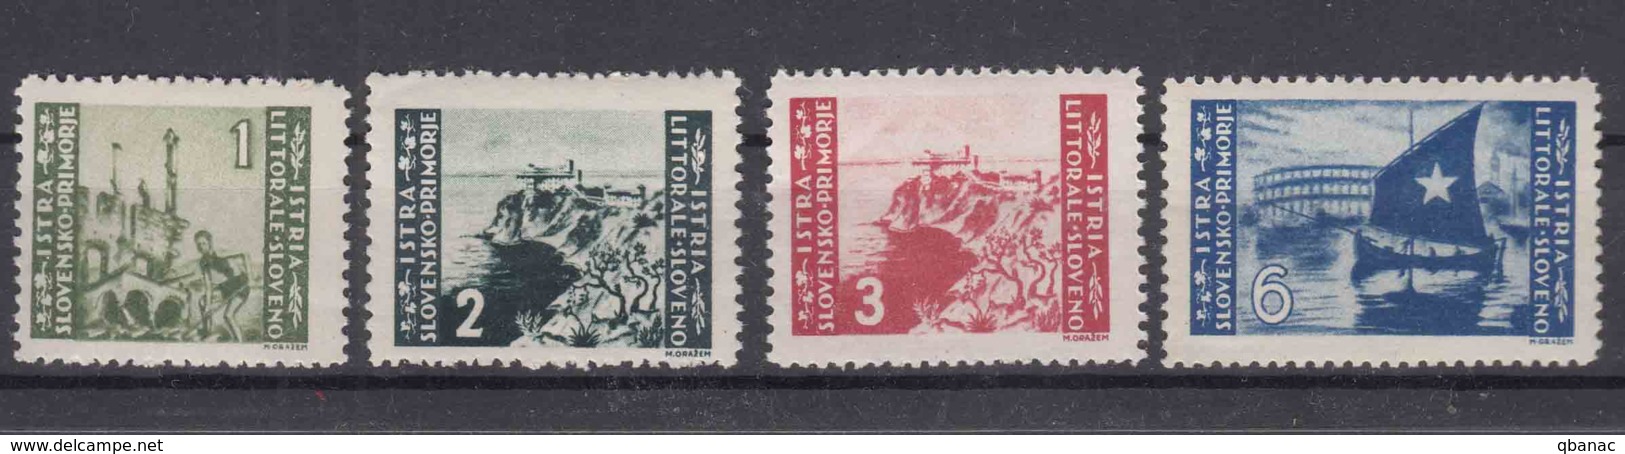 Istria Litorale Yugoslavia Occupation, 1946 Sassone#63-66 Complete Set, Mint Never Hinged - Occup. Iugoslava: Istria